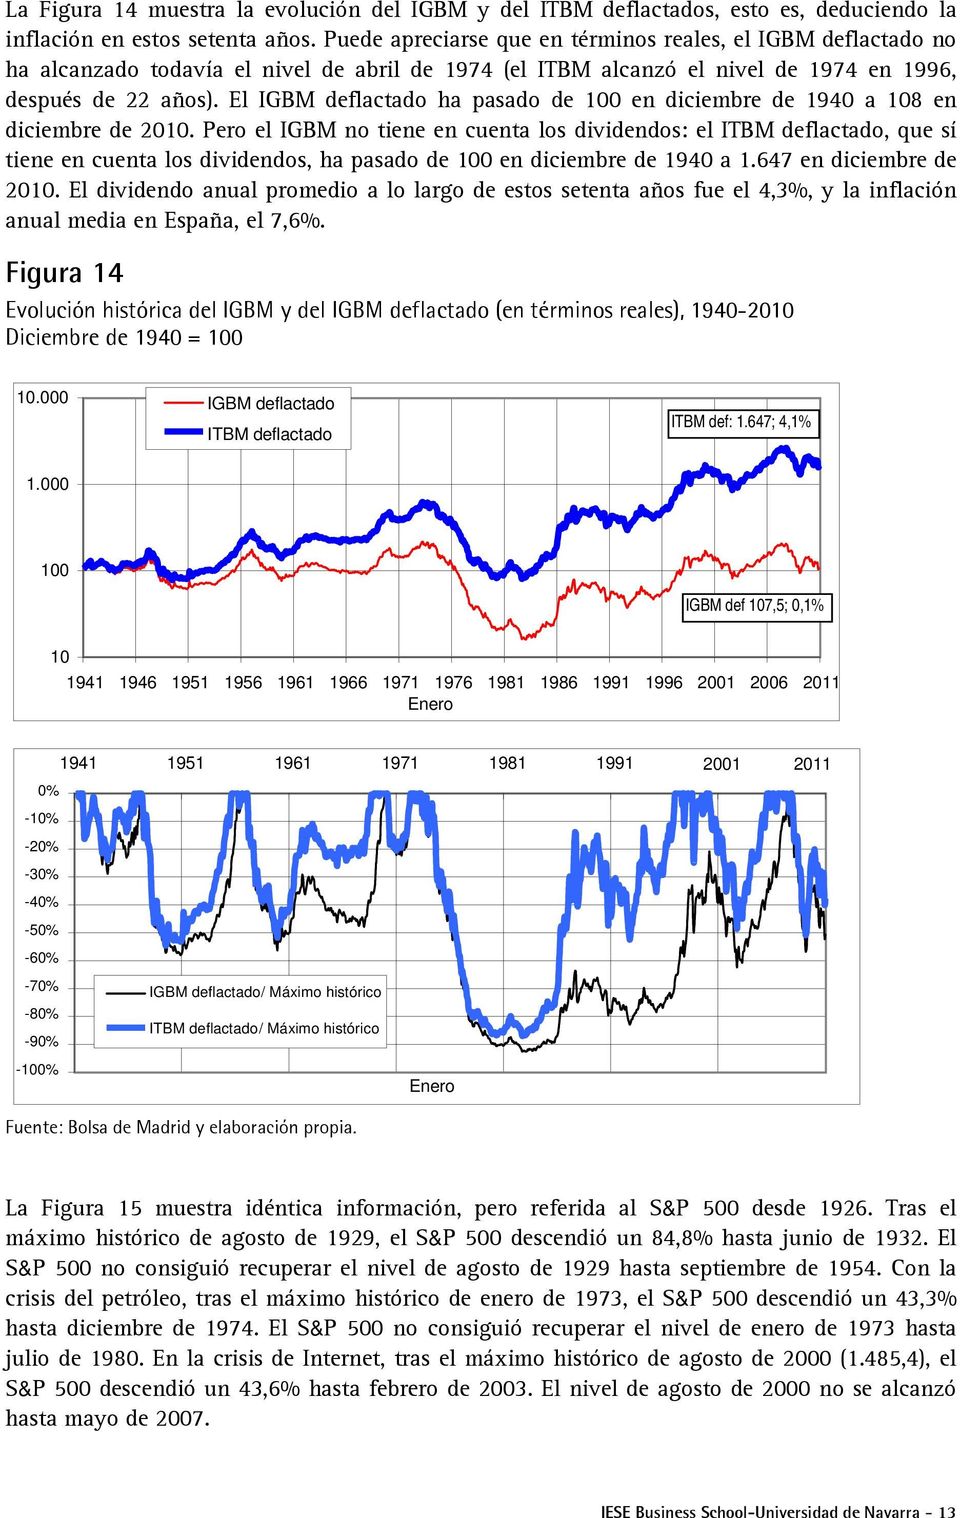 El IGBM deflactado ha pasado de 100 en diciembre de 1940 a 108 en diciembre de 2010.